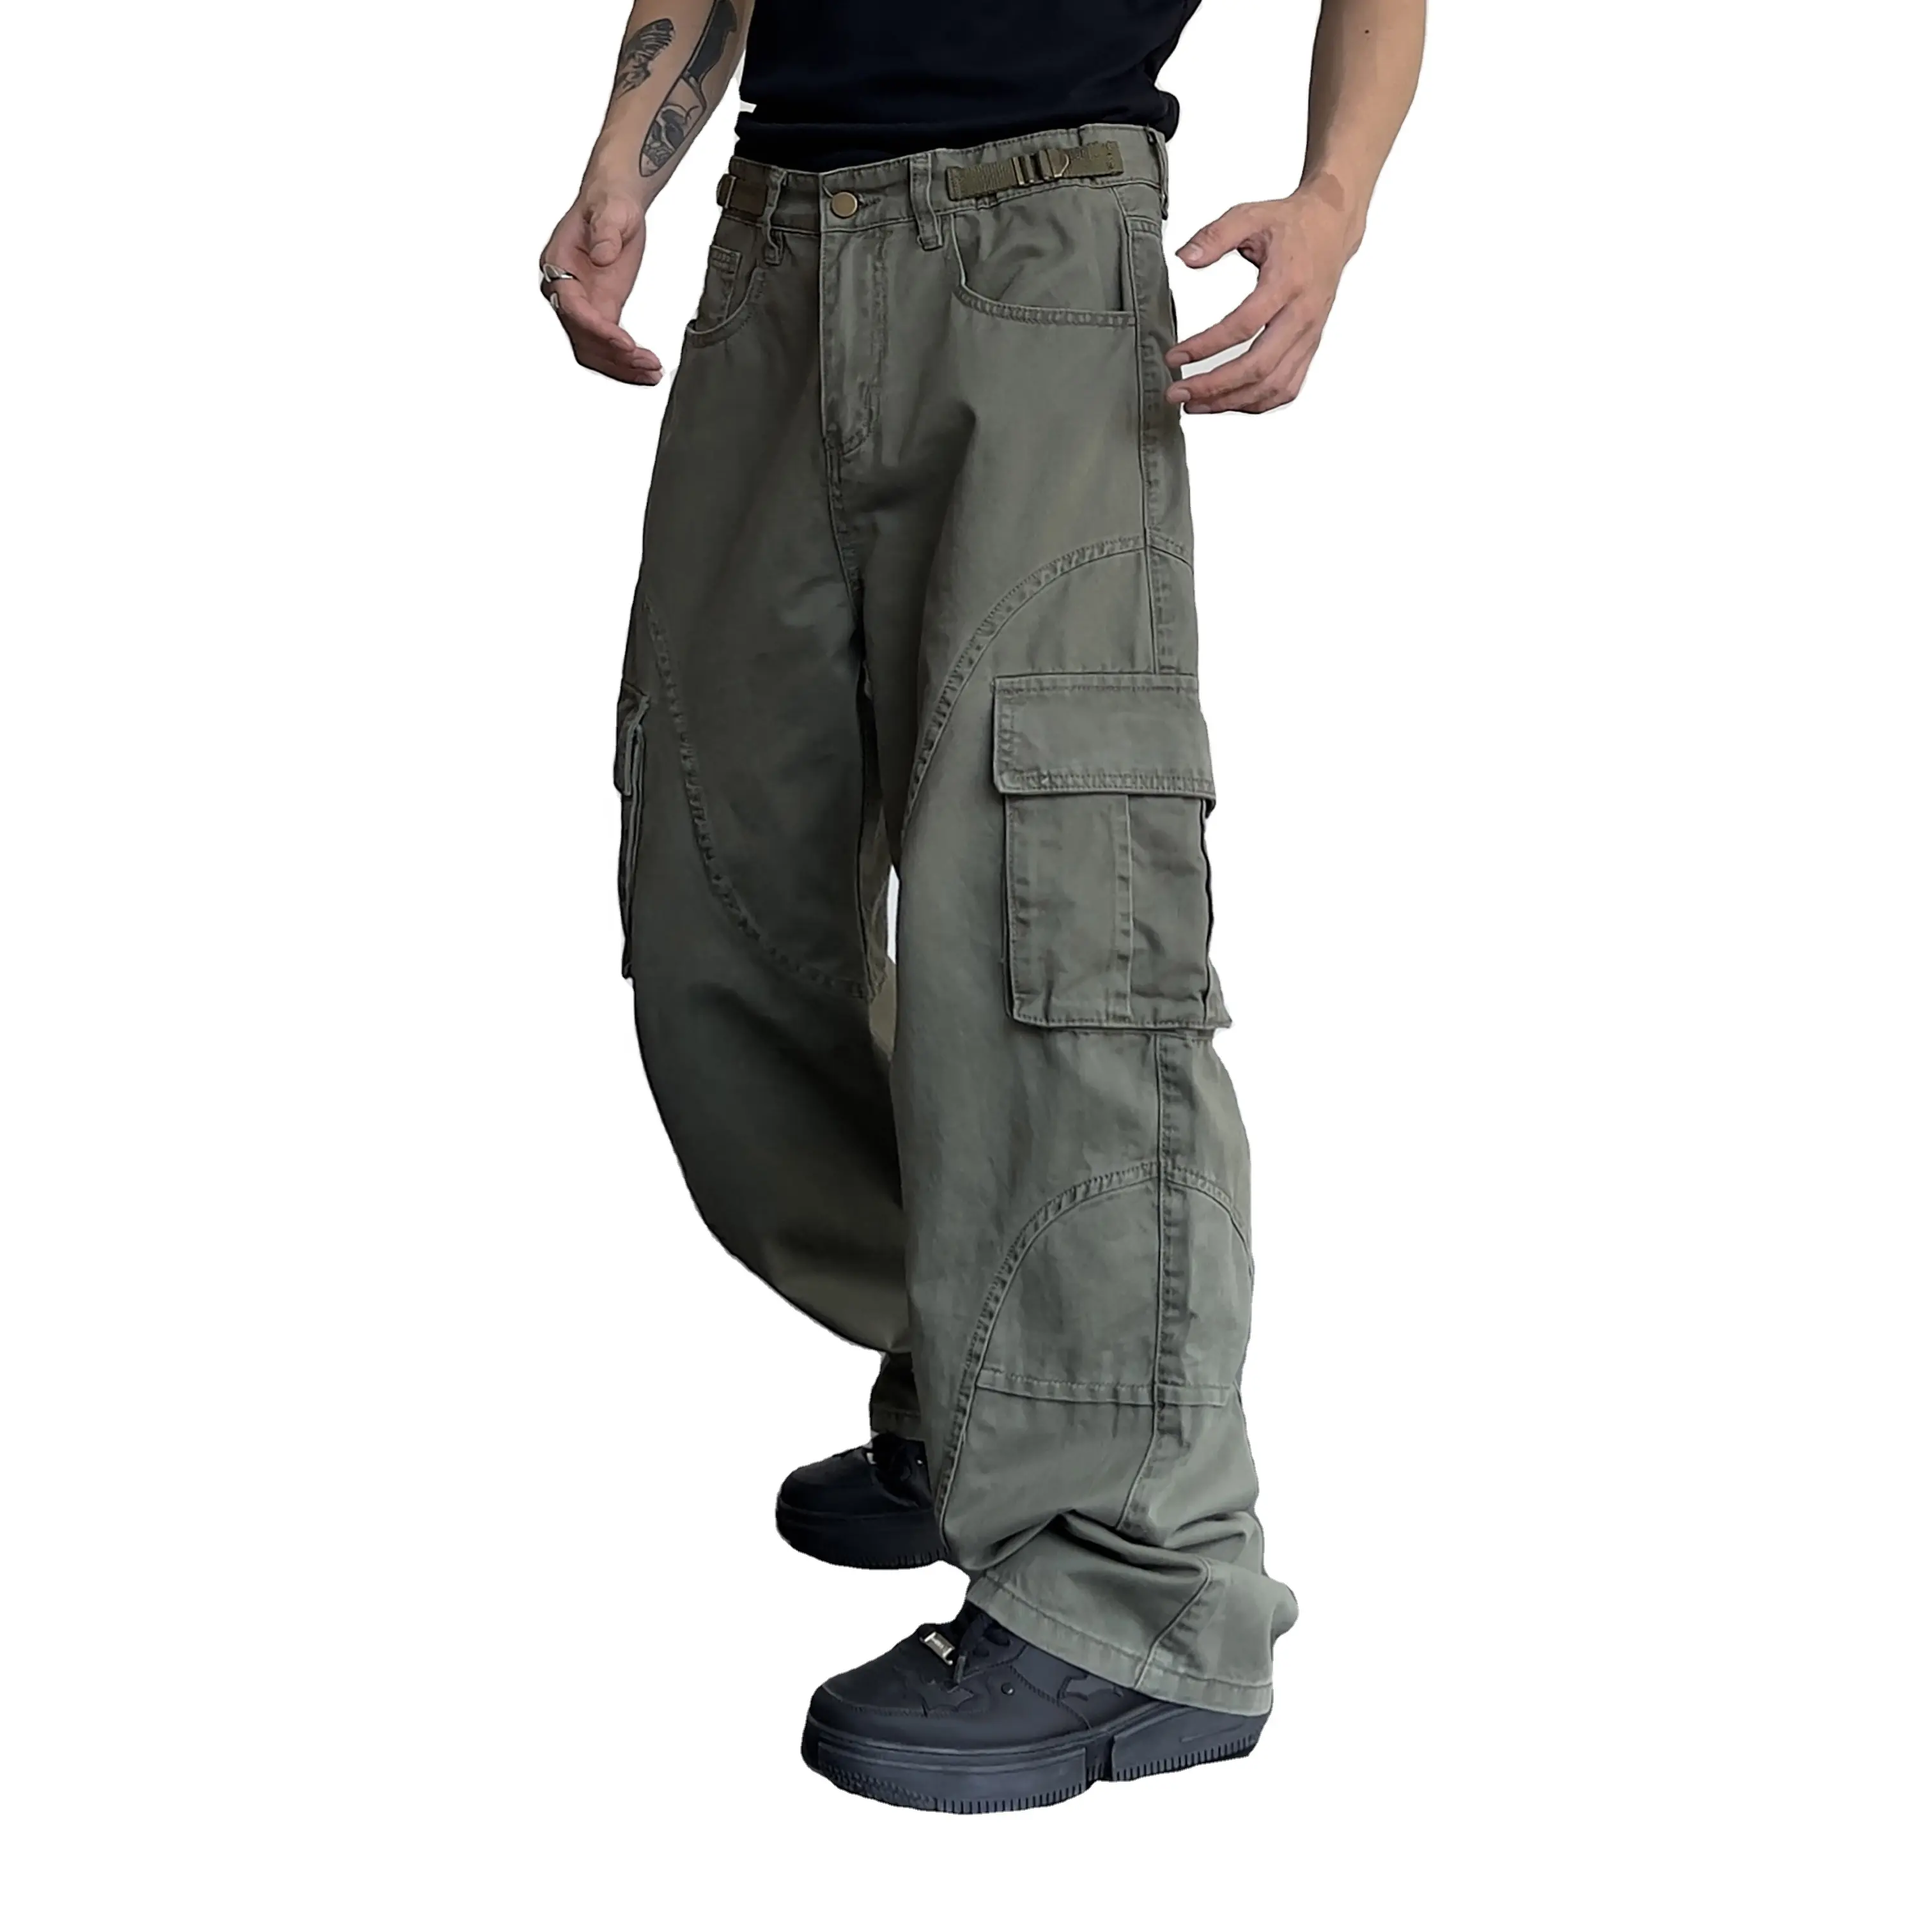 Custom Loose multi Utility Pockets Pants Casual Streetwear Twill six pocket Cargo Pants for Men Baggy Cargo Jogger pants